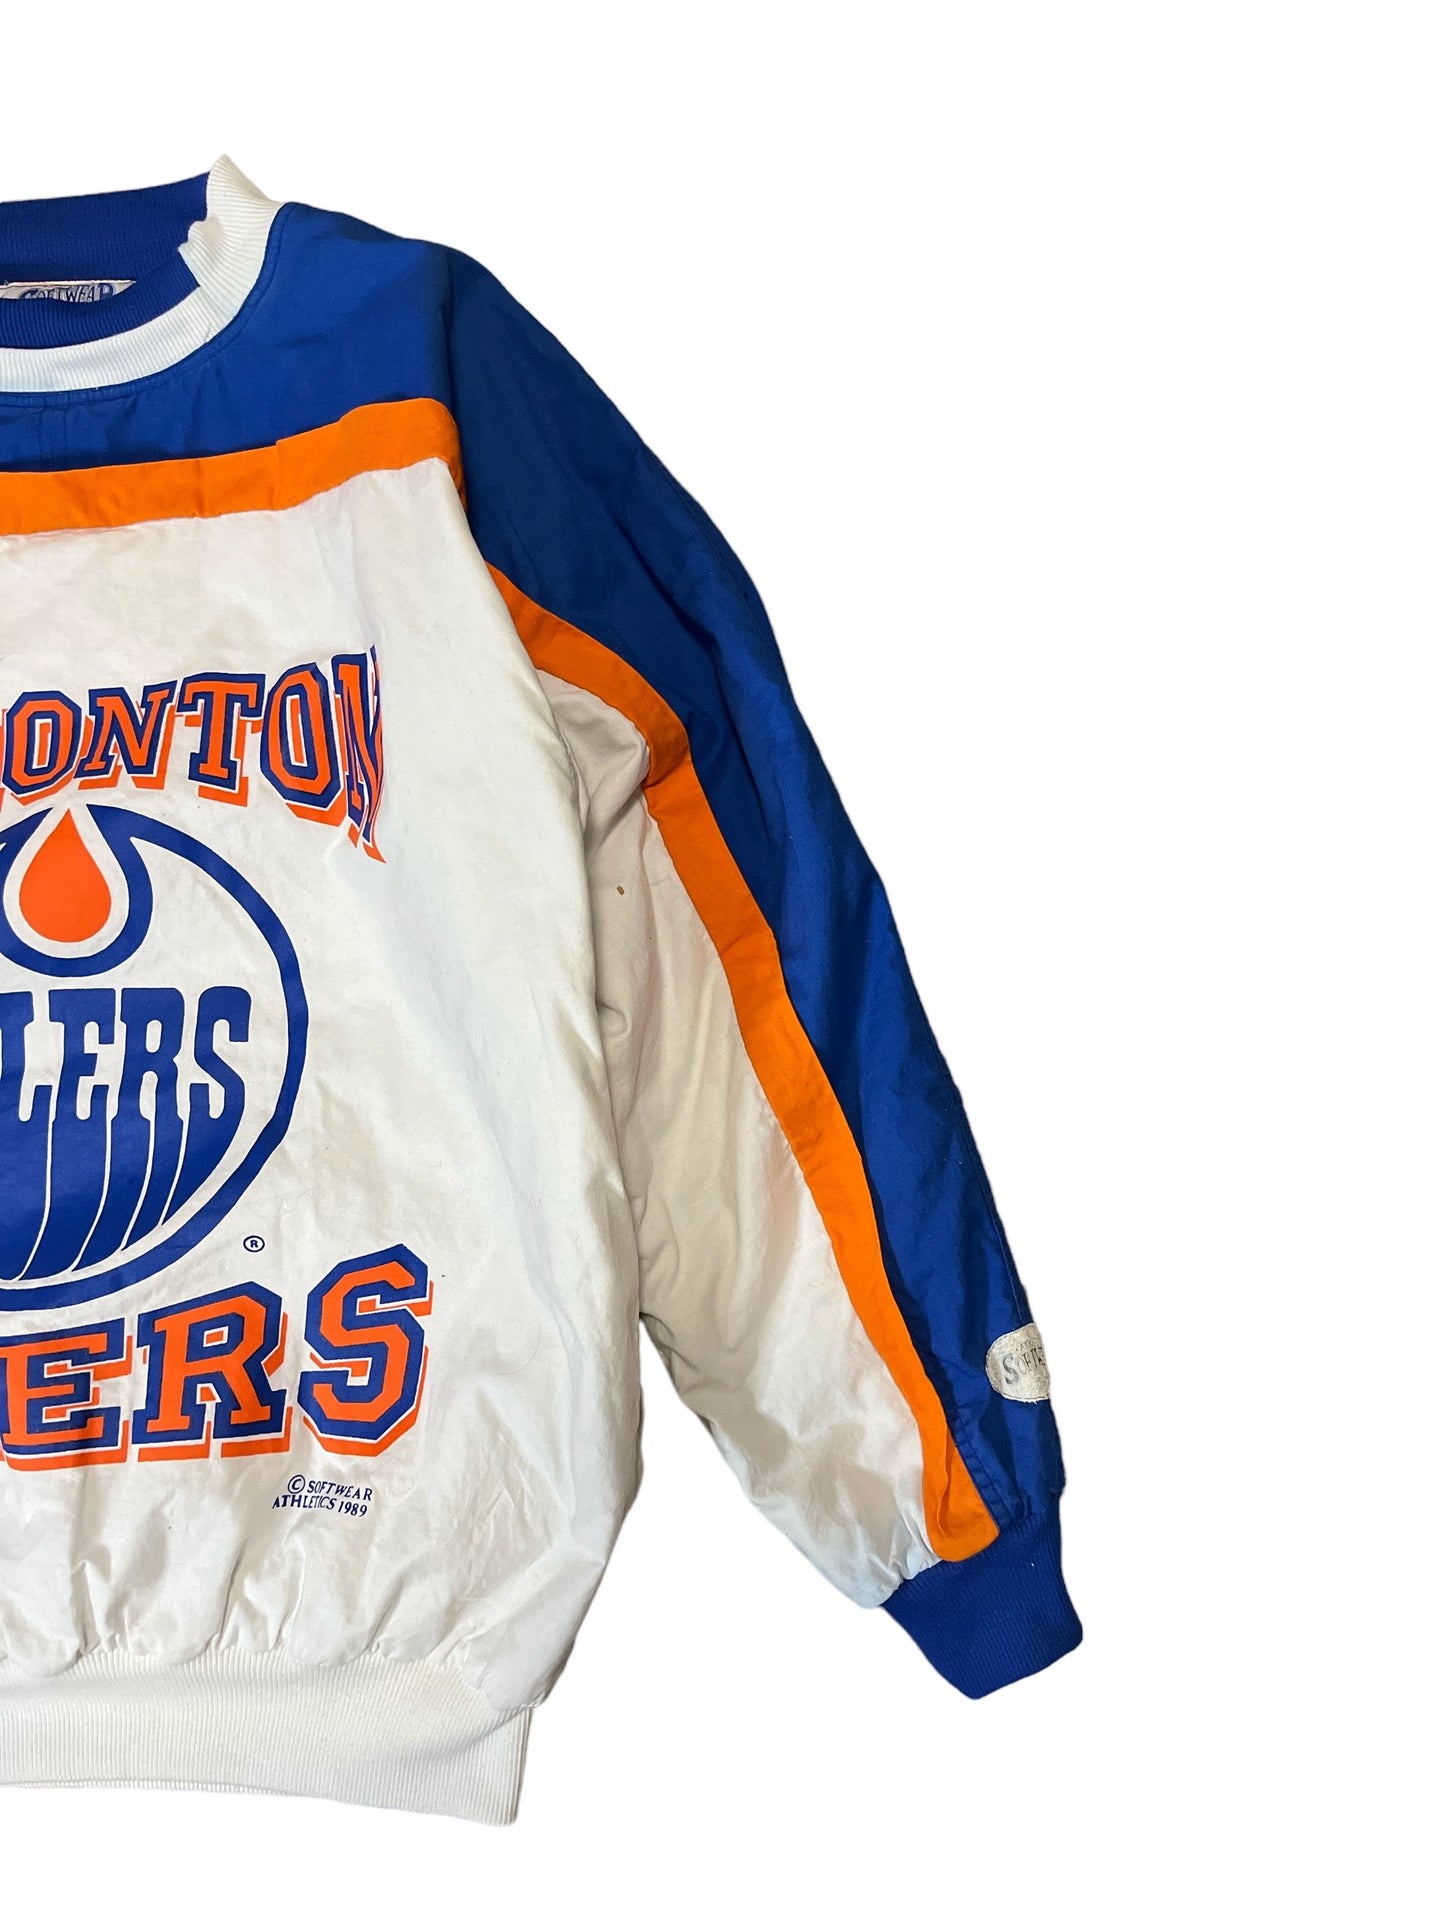 Vintage 90's Softwear Athletics Edmonton Oilers Sweater